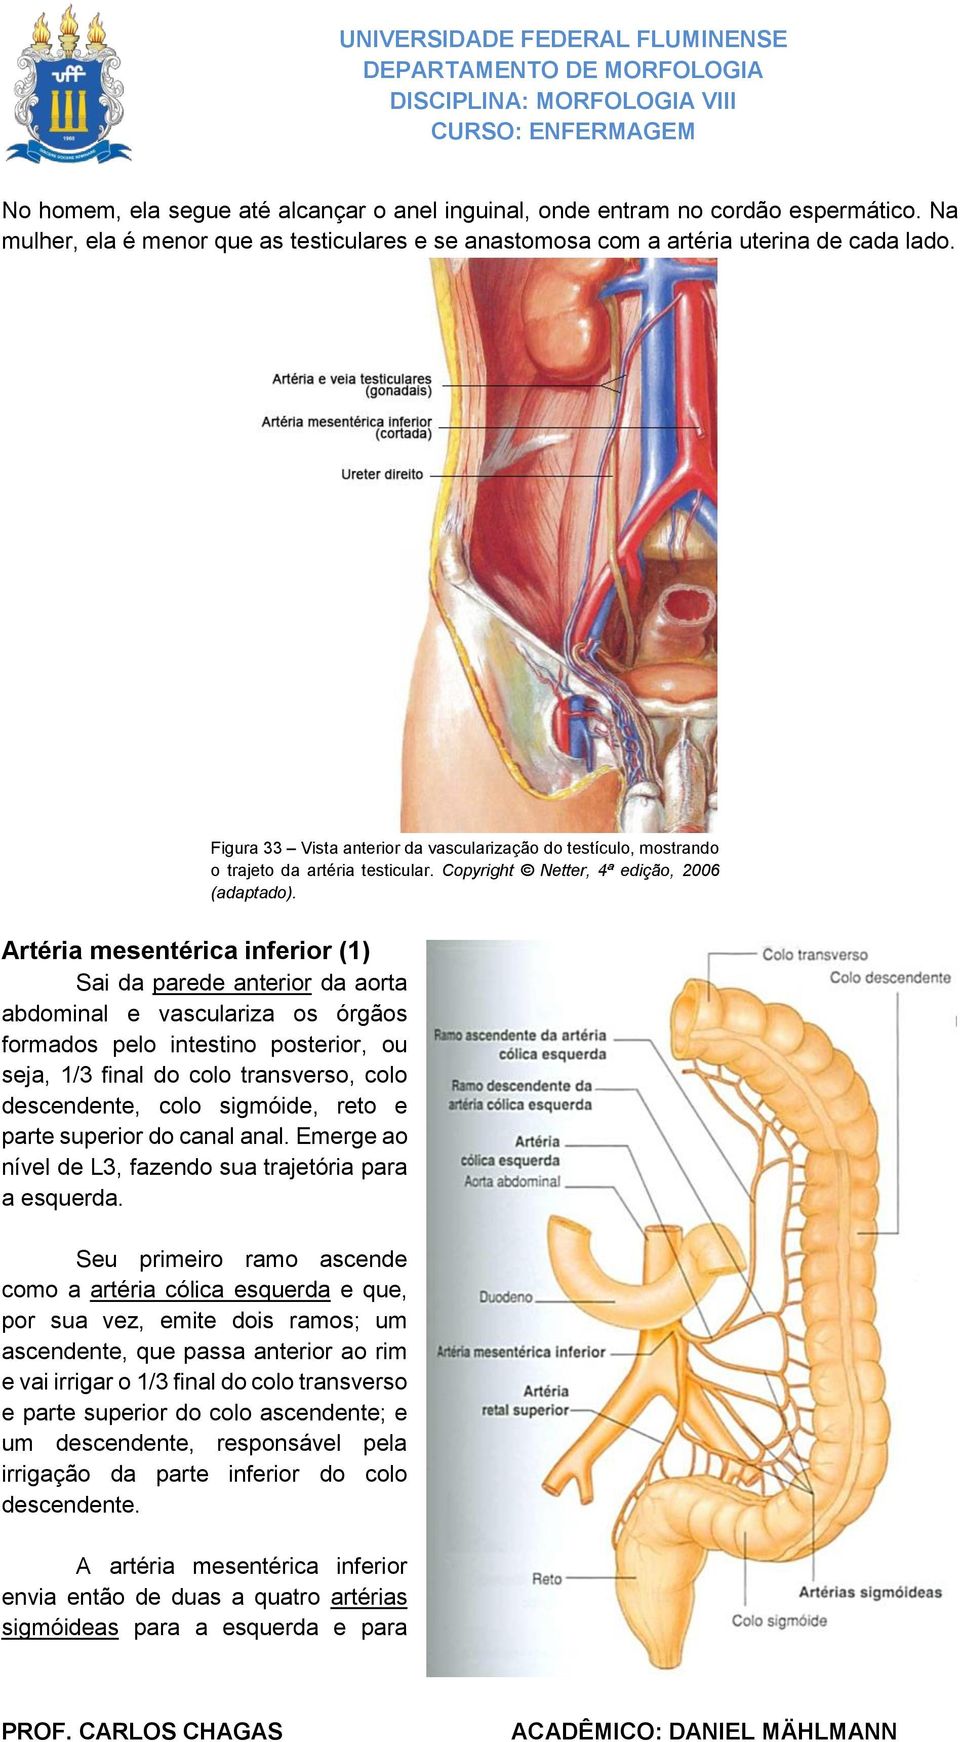 Artéria mesentérica inferior (1) Sai da parede anterior da aorta abdominal e vasculariza os órgãos formados pelo intestino posterior, ou seja, 1/3 final do colo transverso, colo descendente, colo